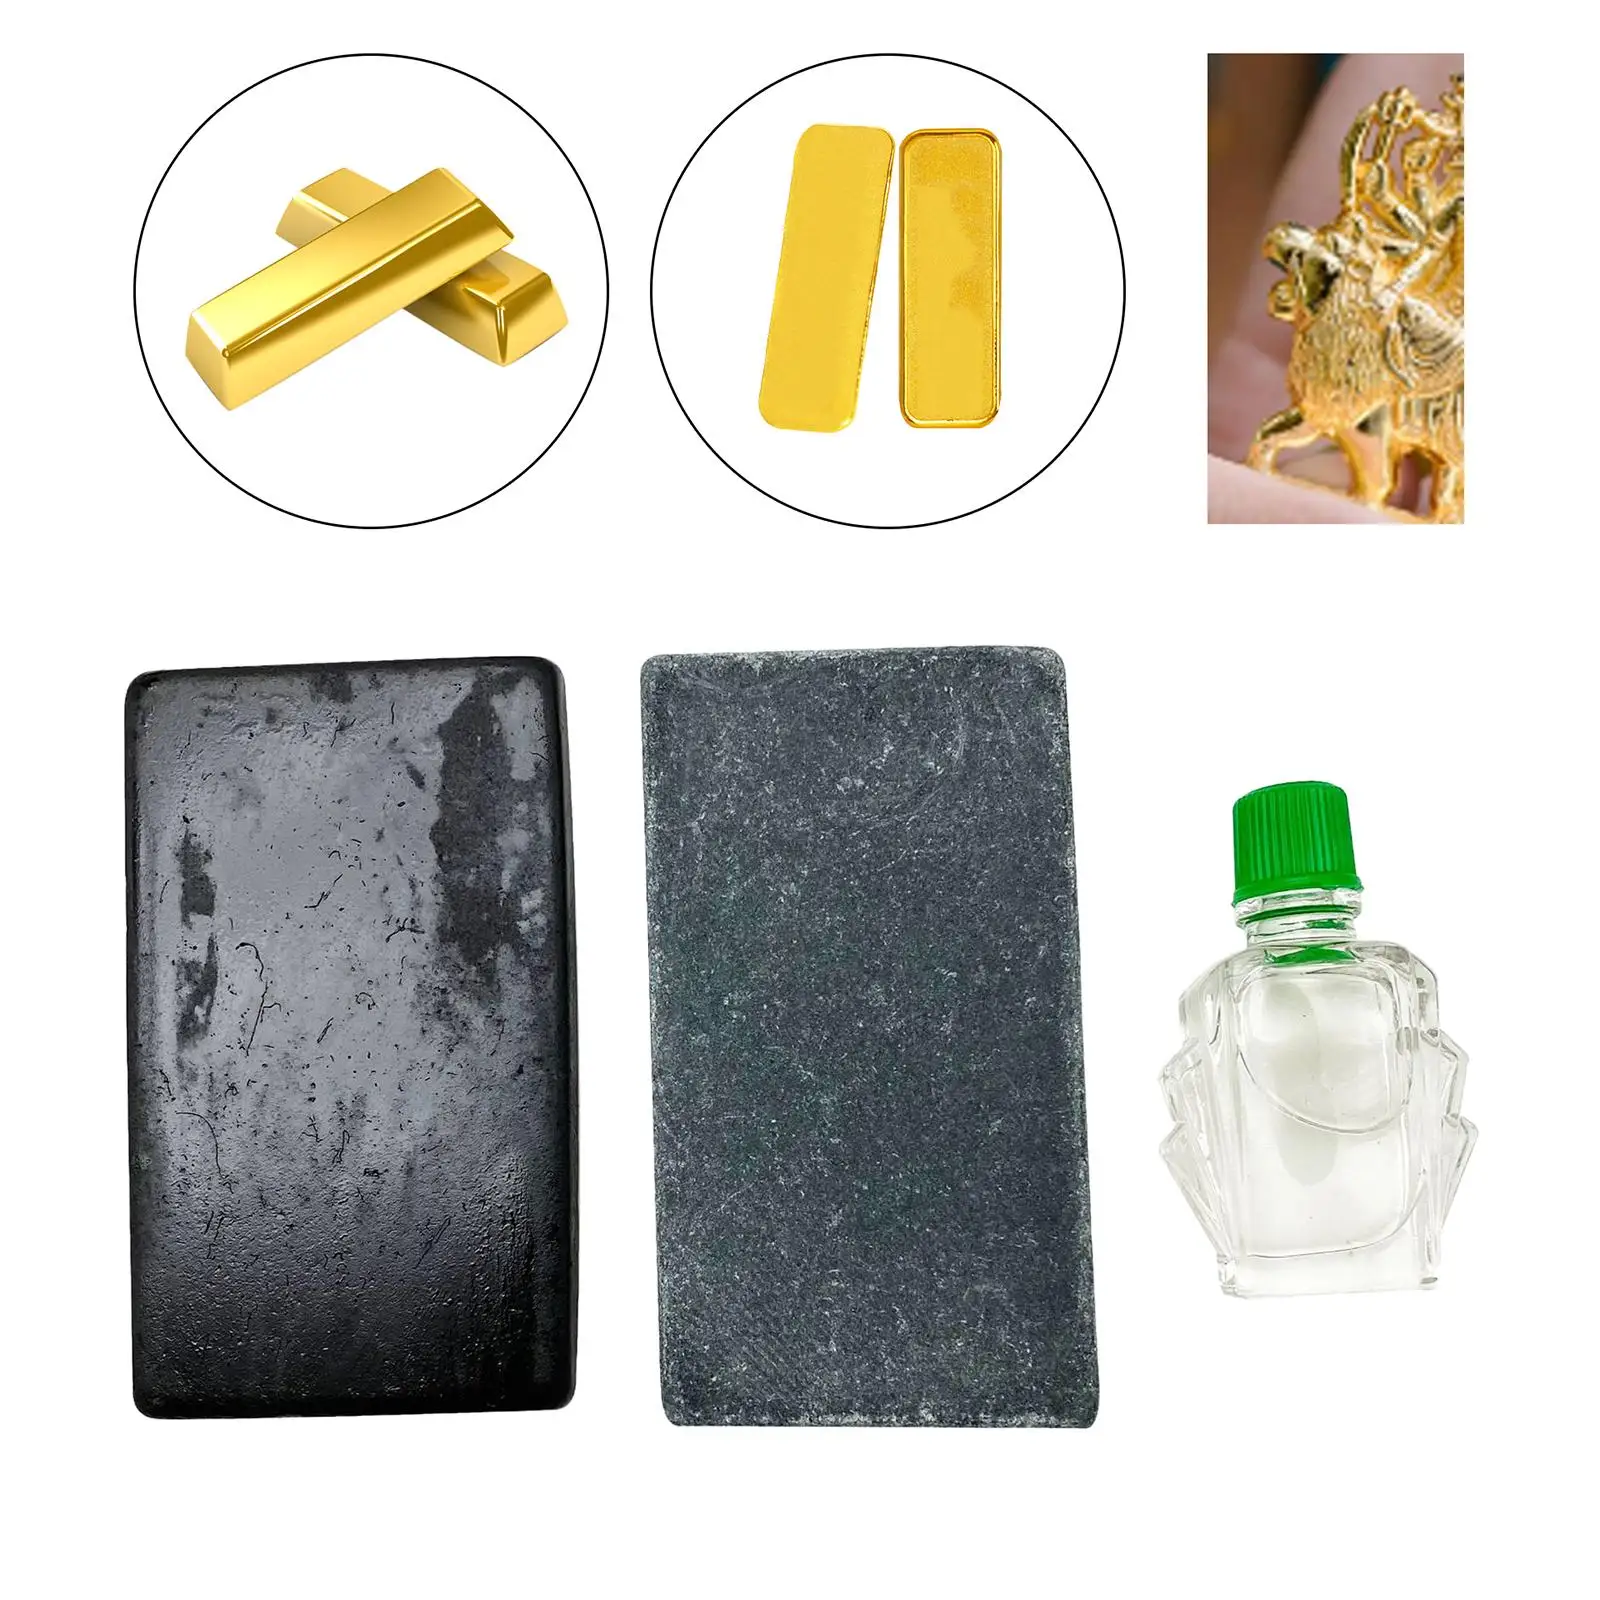 Gold Testing Stone Acid Test Kit Test Precious Metals Jewelry Test Stone Portable Jewelry Tools 10K 14K 18K 22K Gold Testing Kit